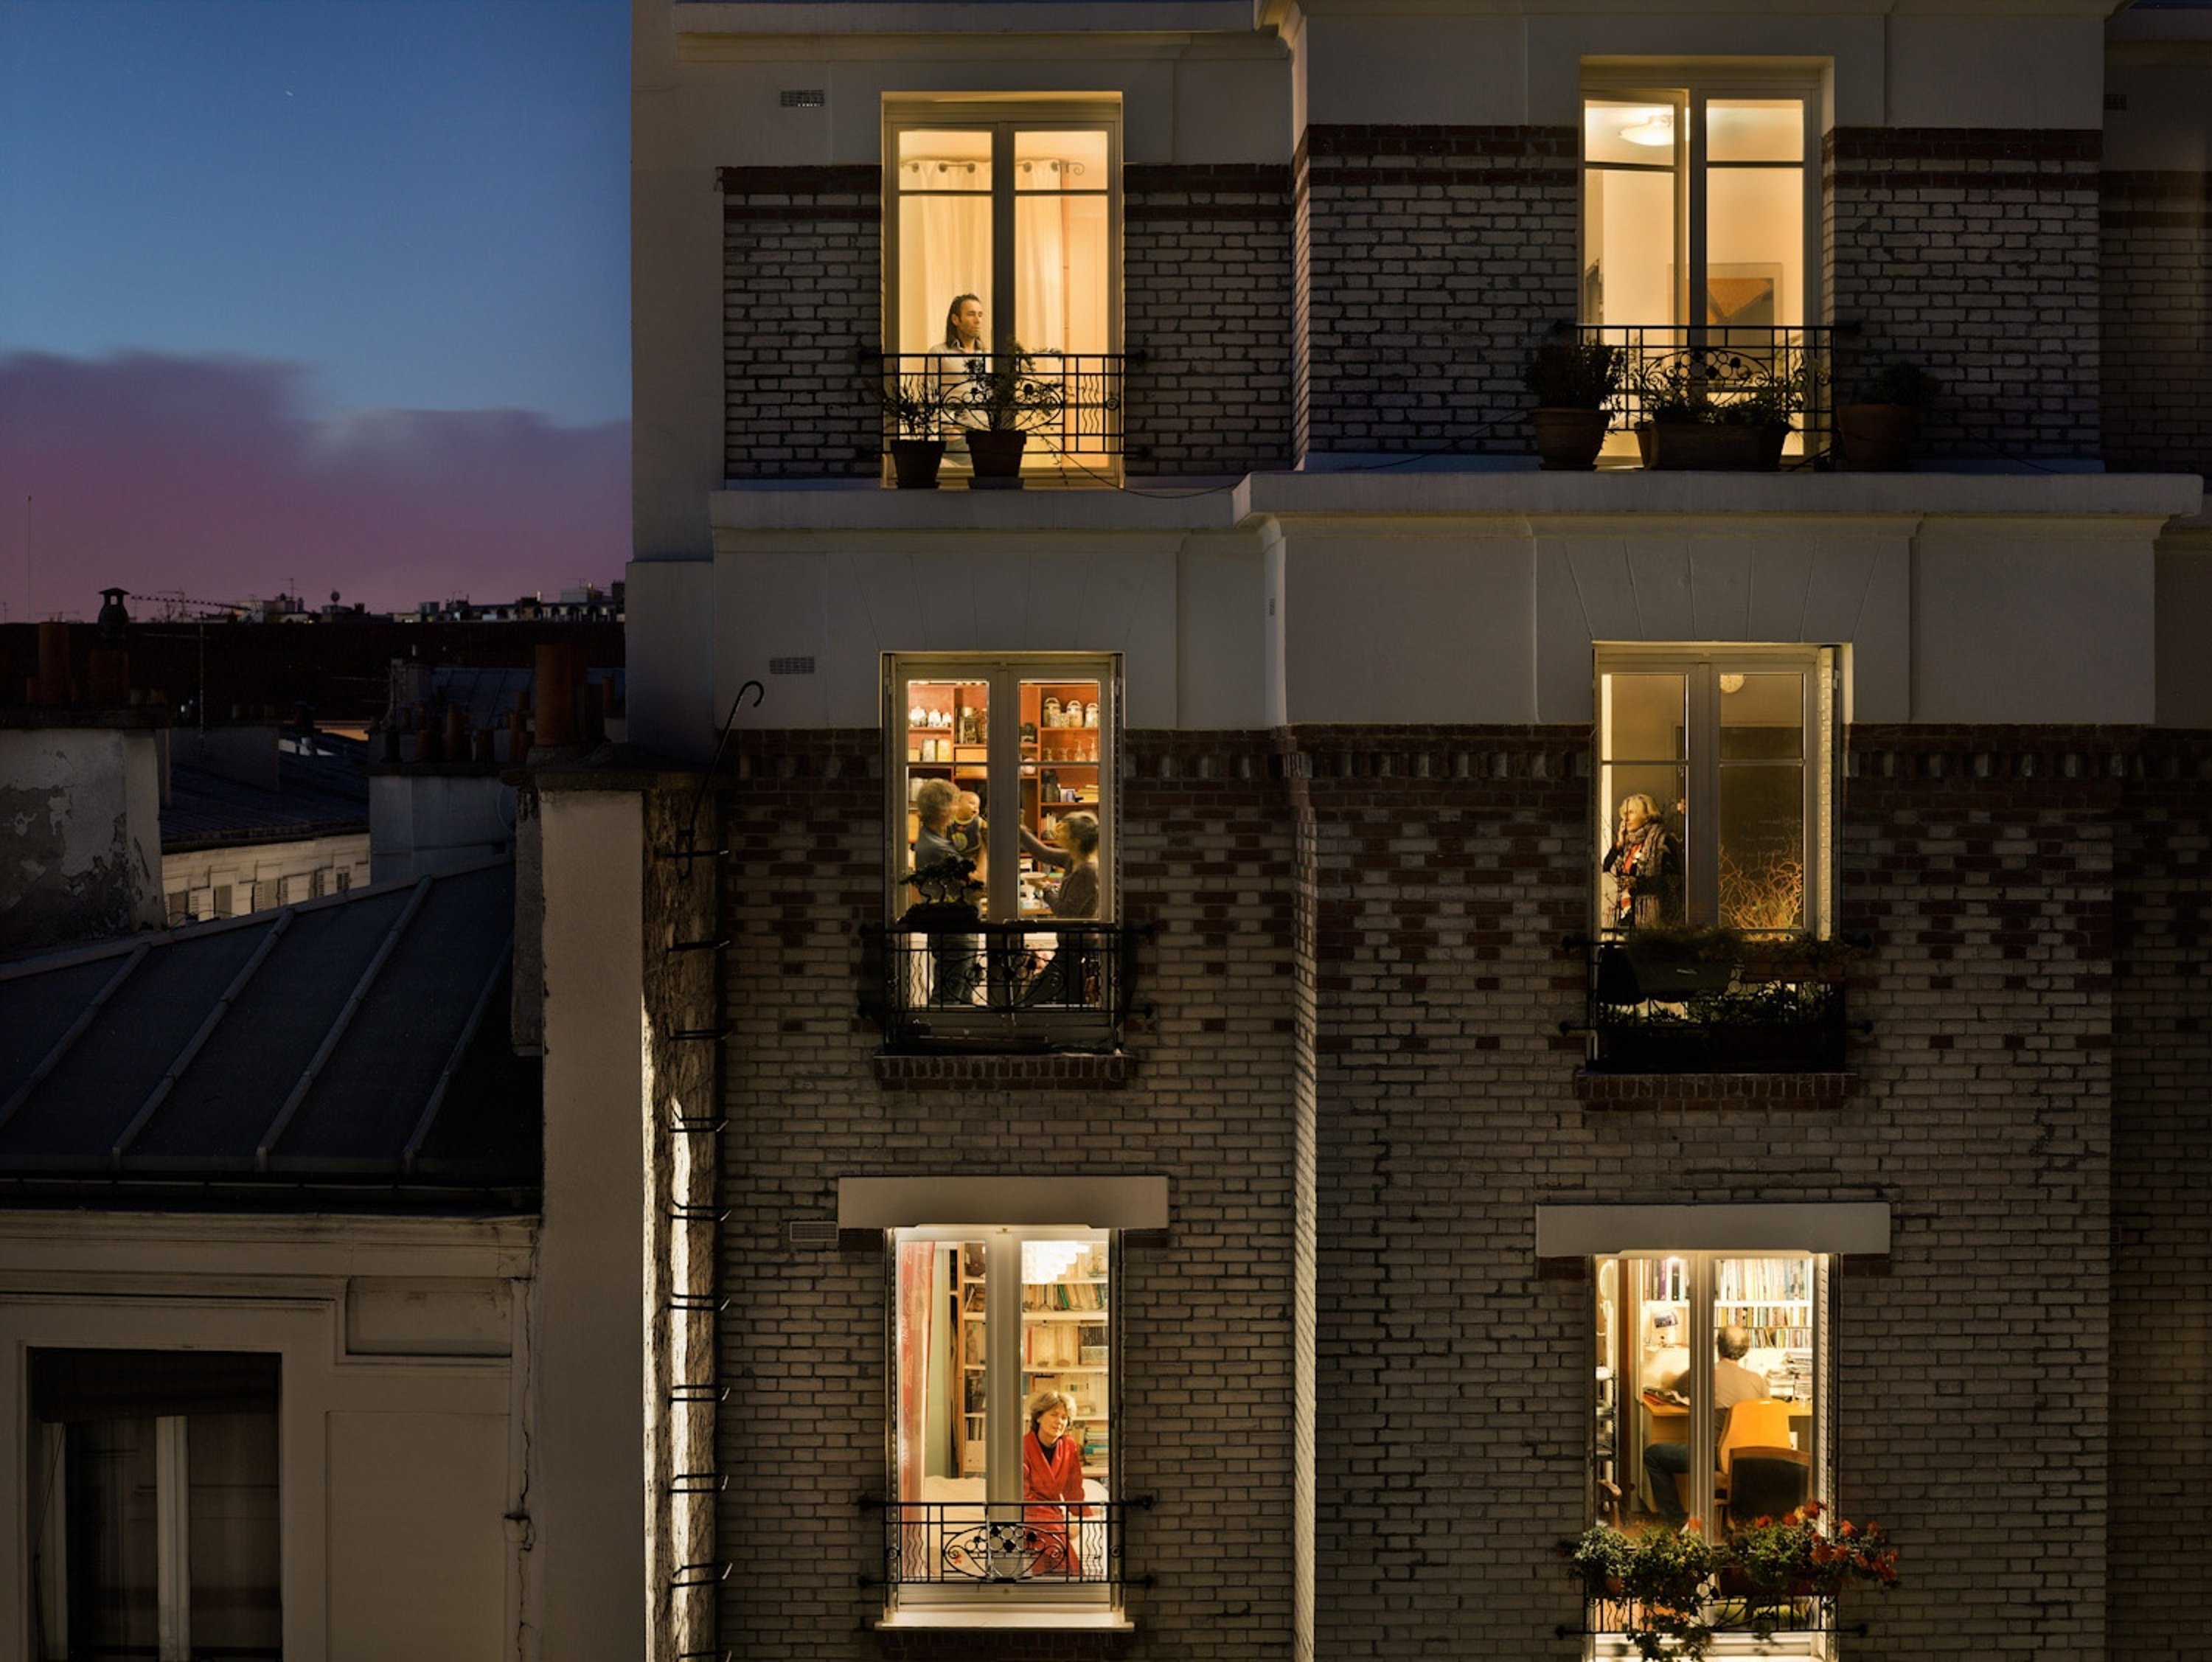 The neighbours window. Париж напротив. Гейл Алберт-Халабан, «из моего окна».